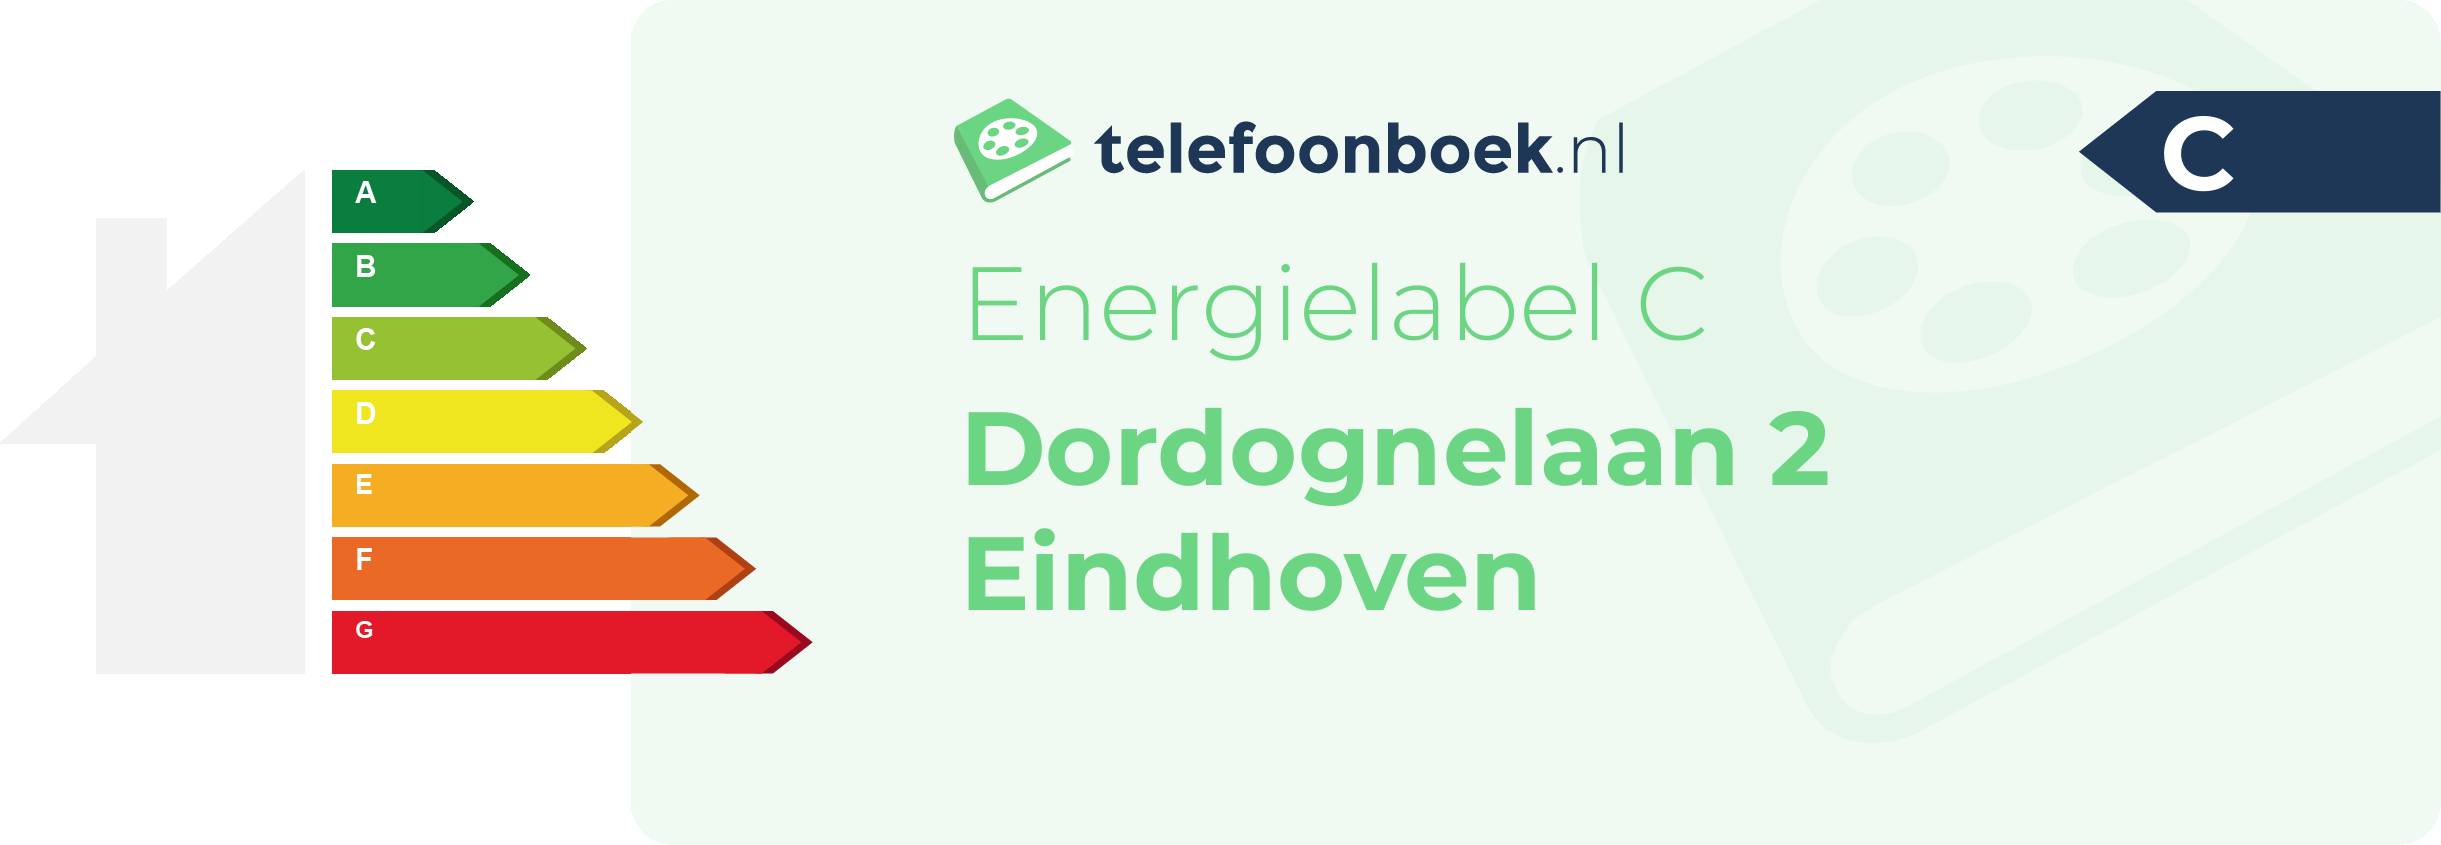 Energielabel Dordognelaan 2 Eindhoven